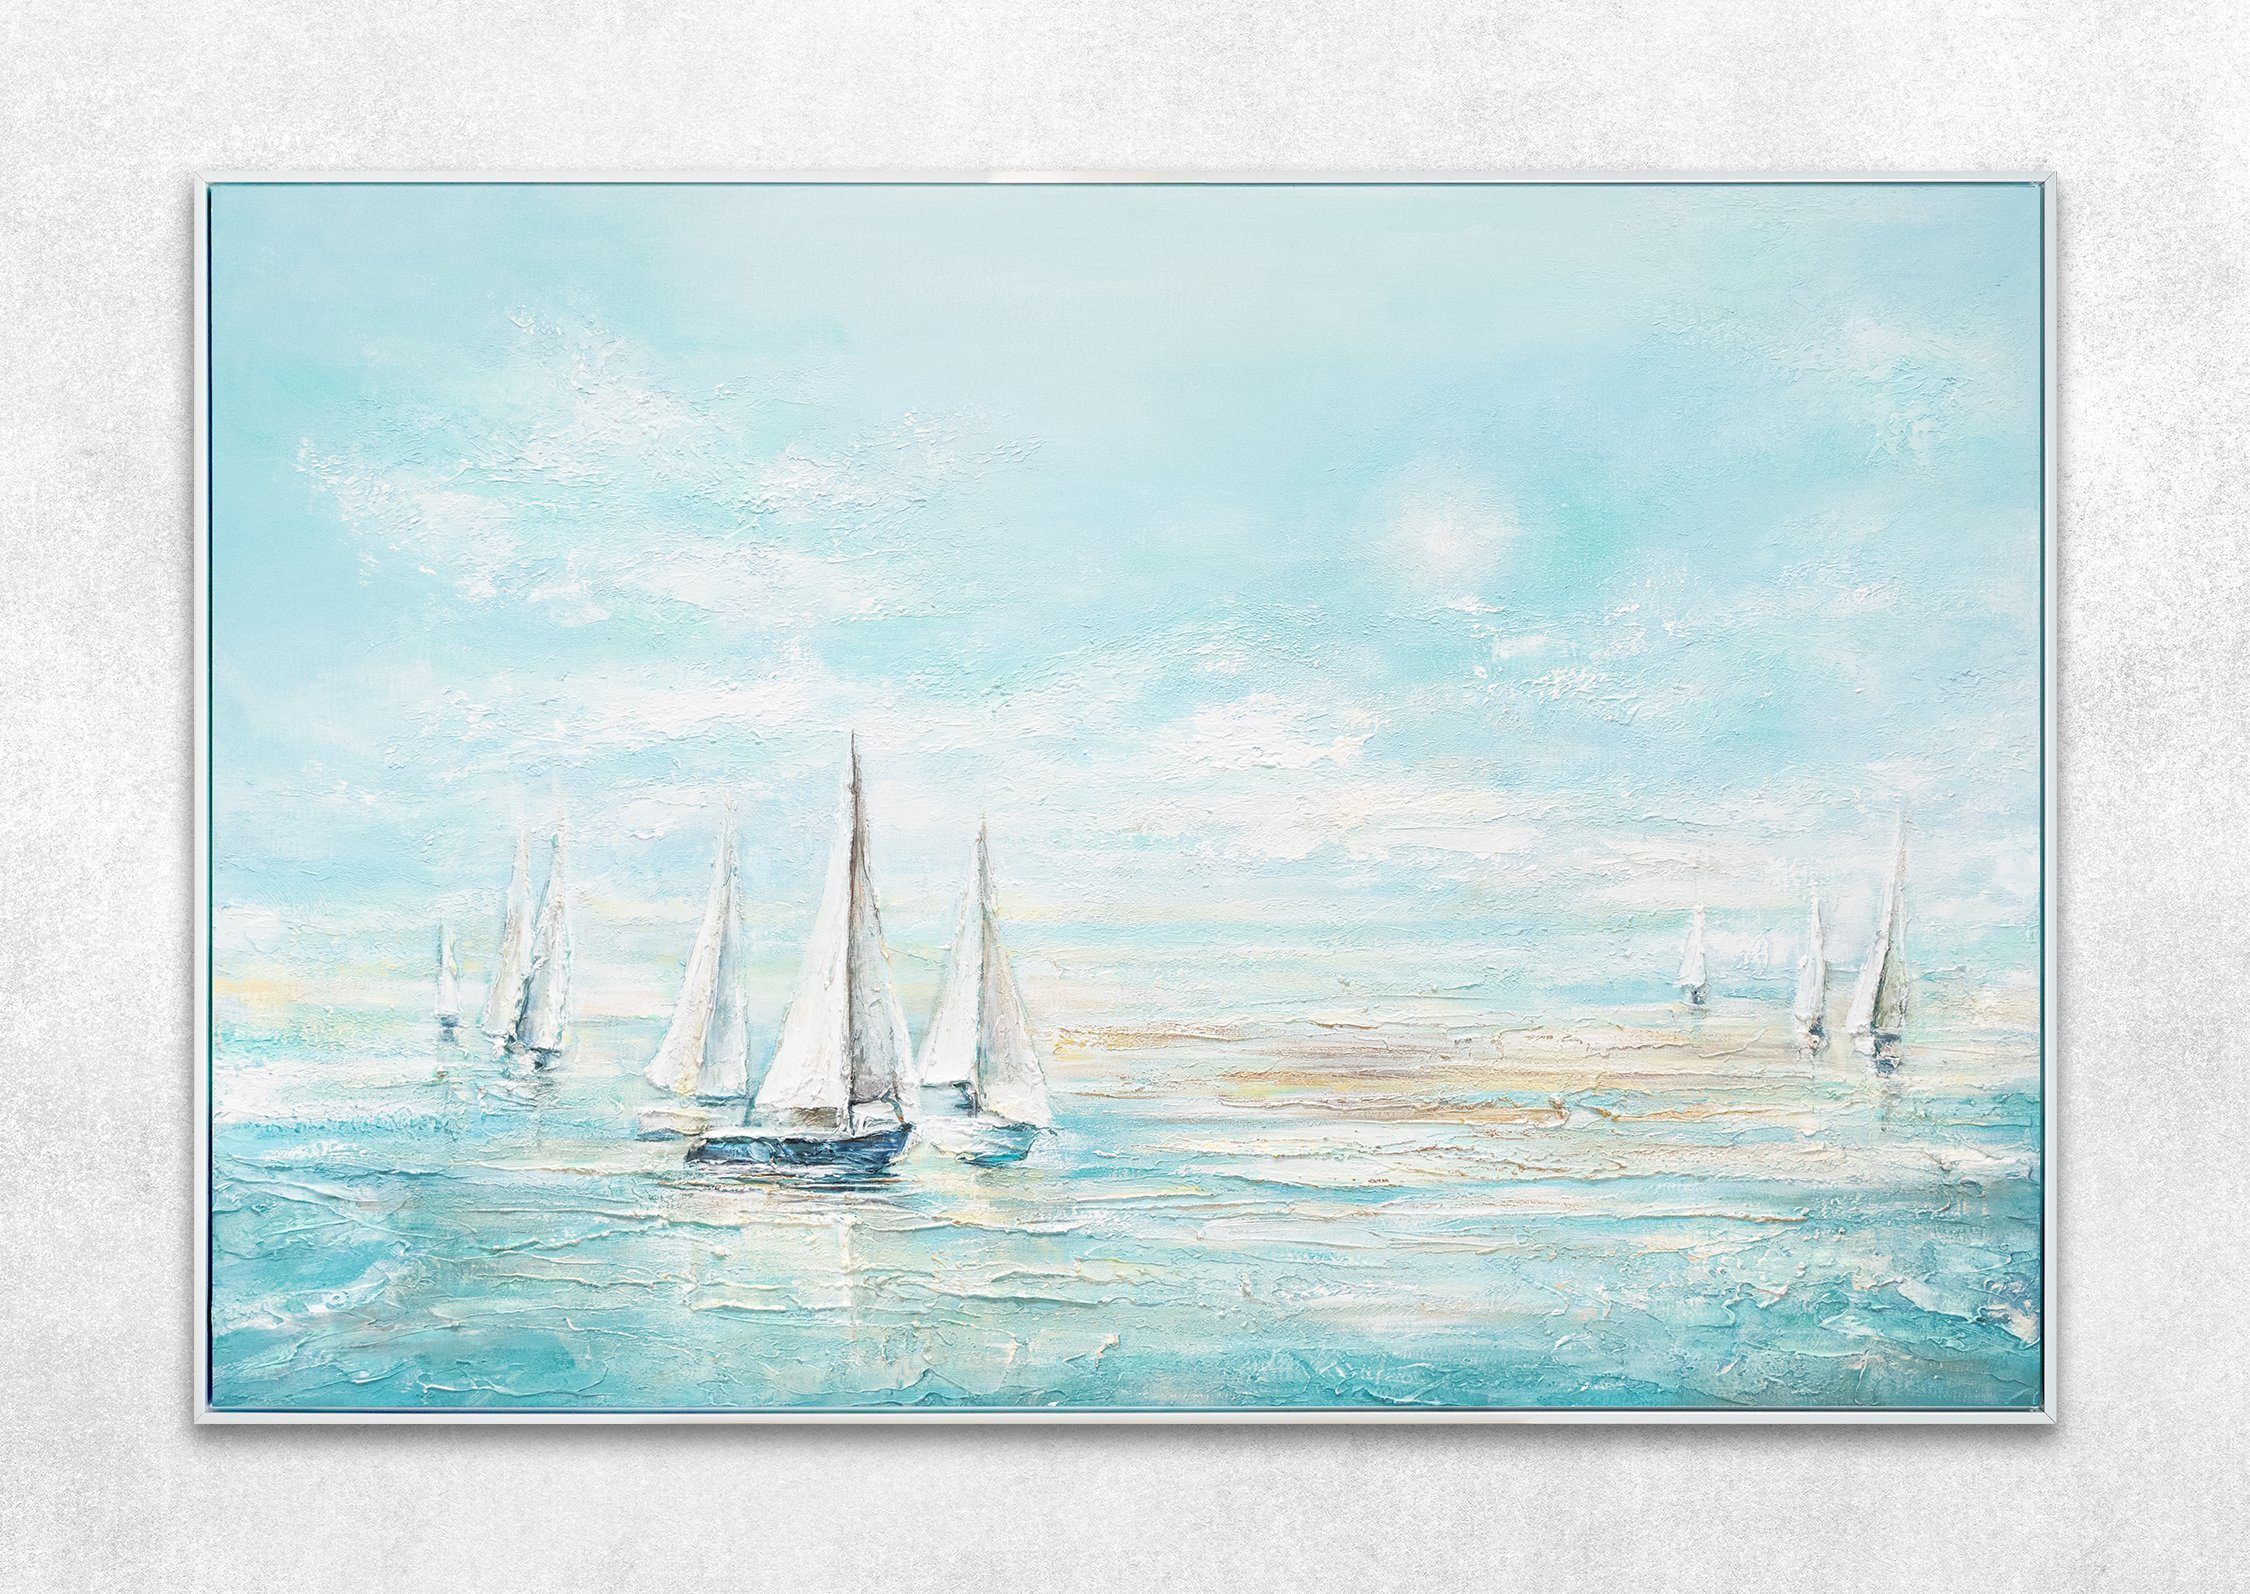 Handgemalt Landschaft, Meeresblau, Bild Meer Rahmen YS-Art Segelboote Leinwand Hellblau in Weiß Blau Gemälde Mit